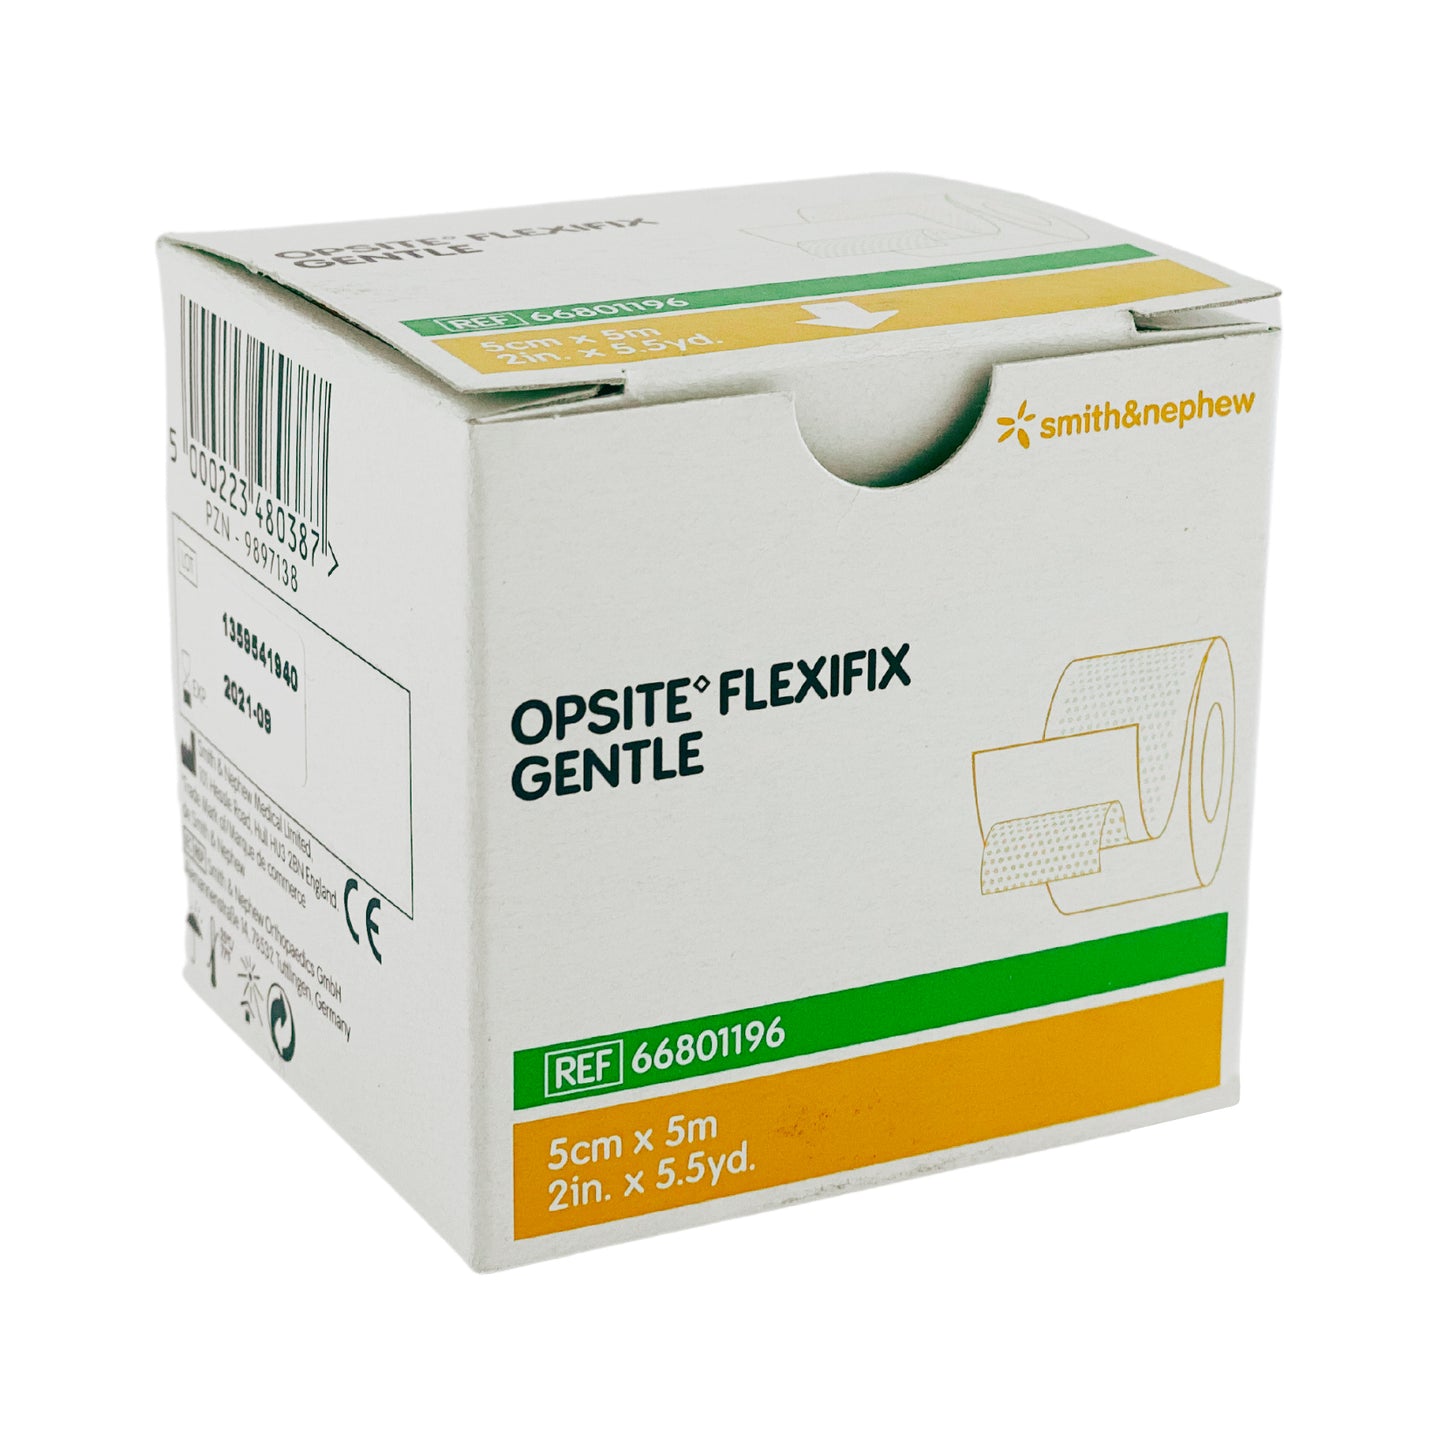 Opsite Flexifix Gentle  Box 5m